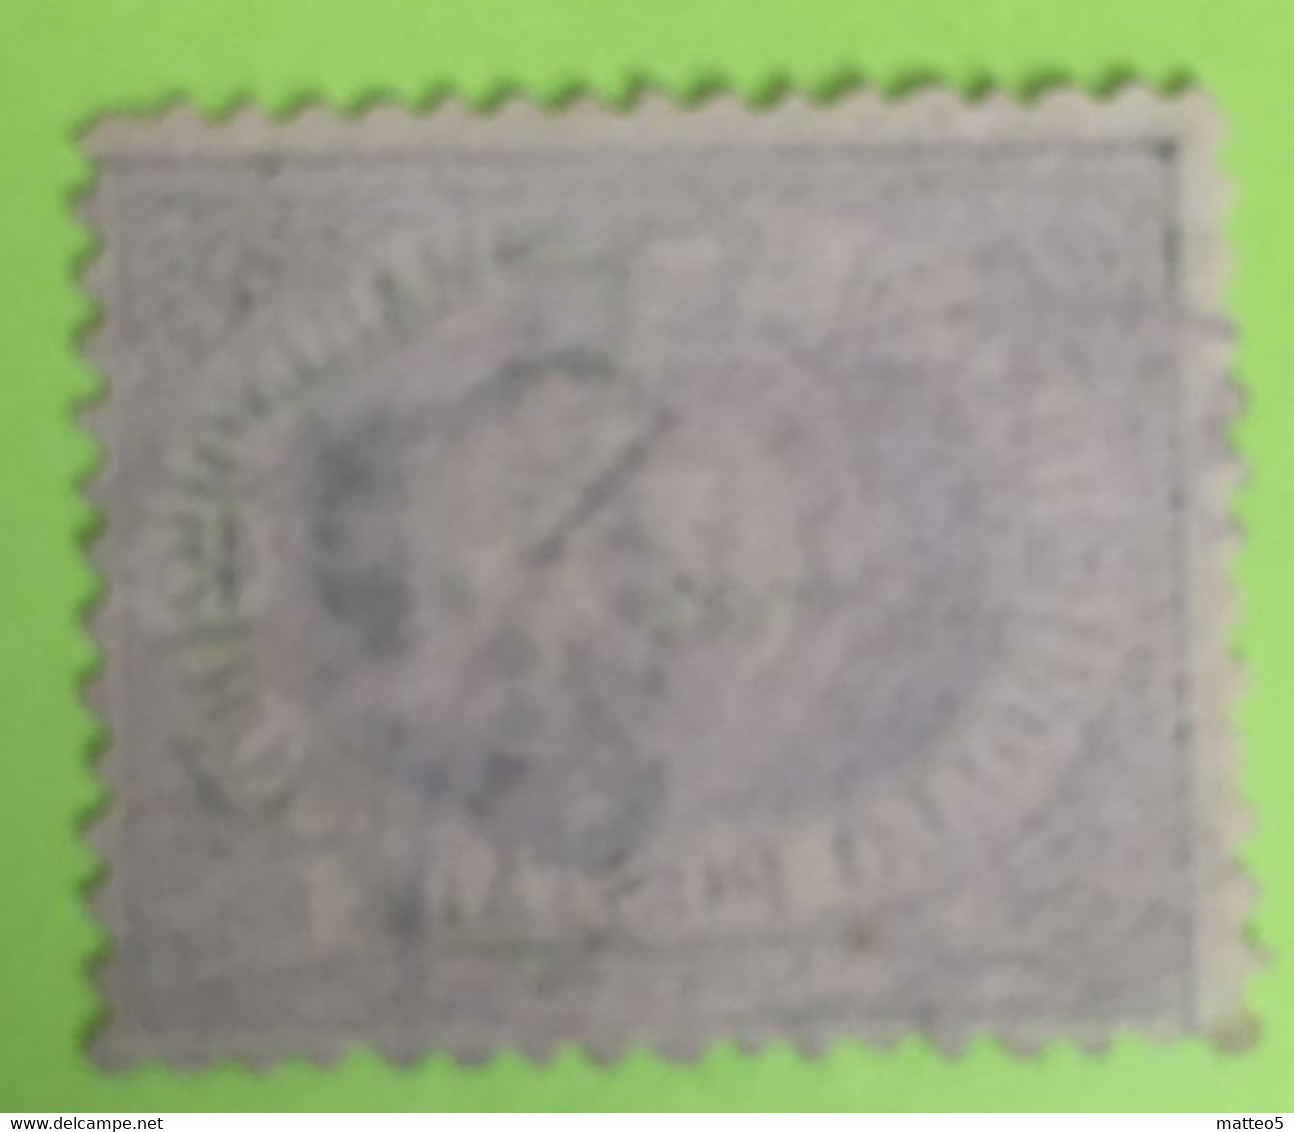 1892/94 - San Marino - 45 Cent Stemma - Usato - - Usados